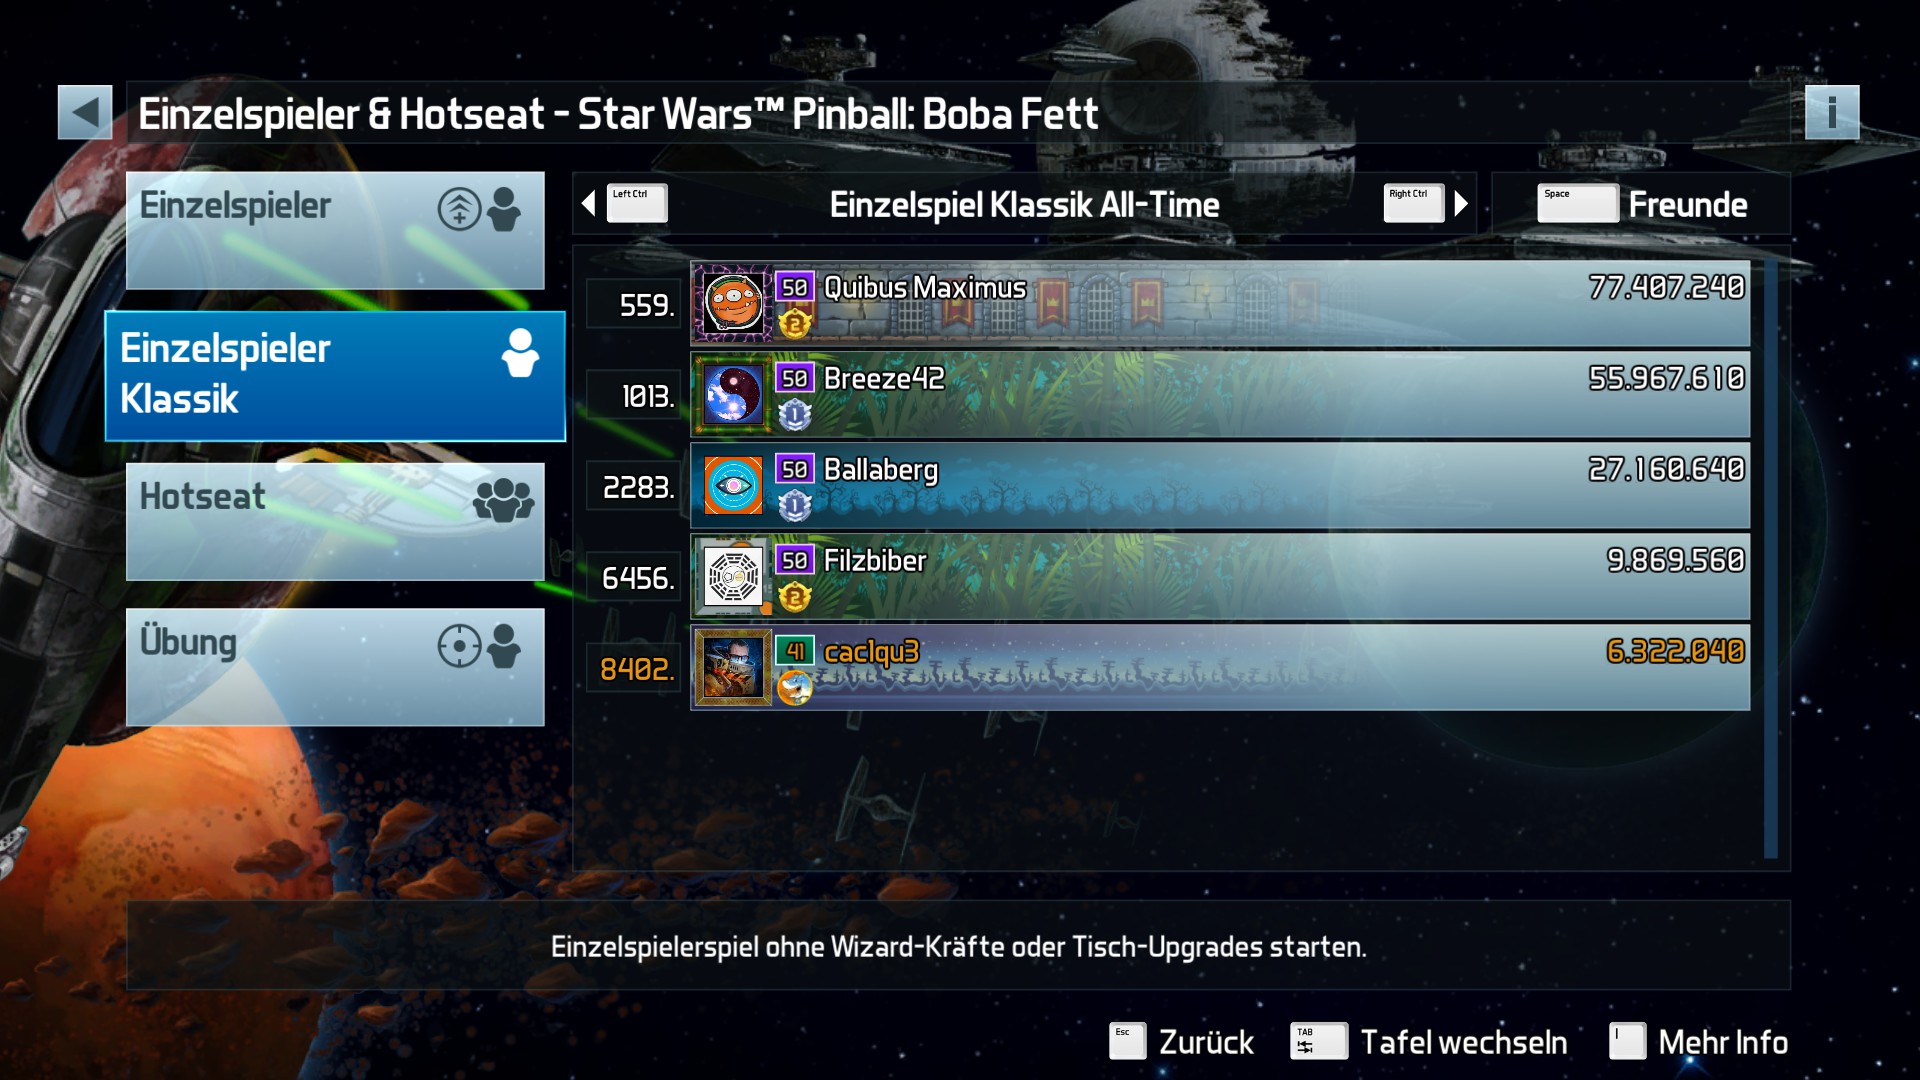 e2e4: Pinball FX3: Star Wars Pinball: Boba Fett [Classic] (PC) 6,322,040 points on 2022-05-19 01:51:39